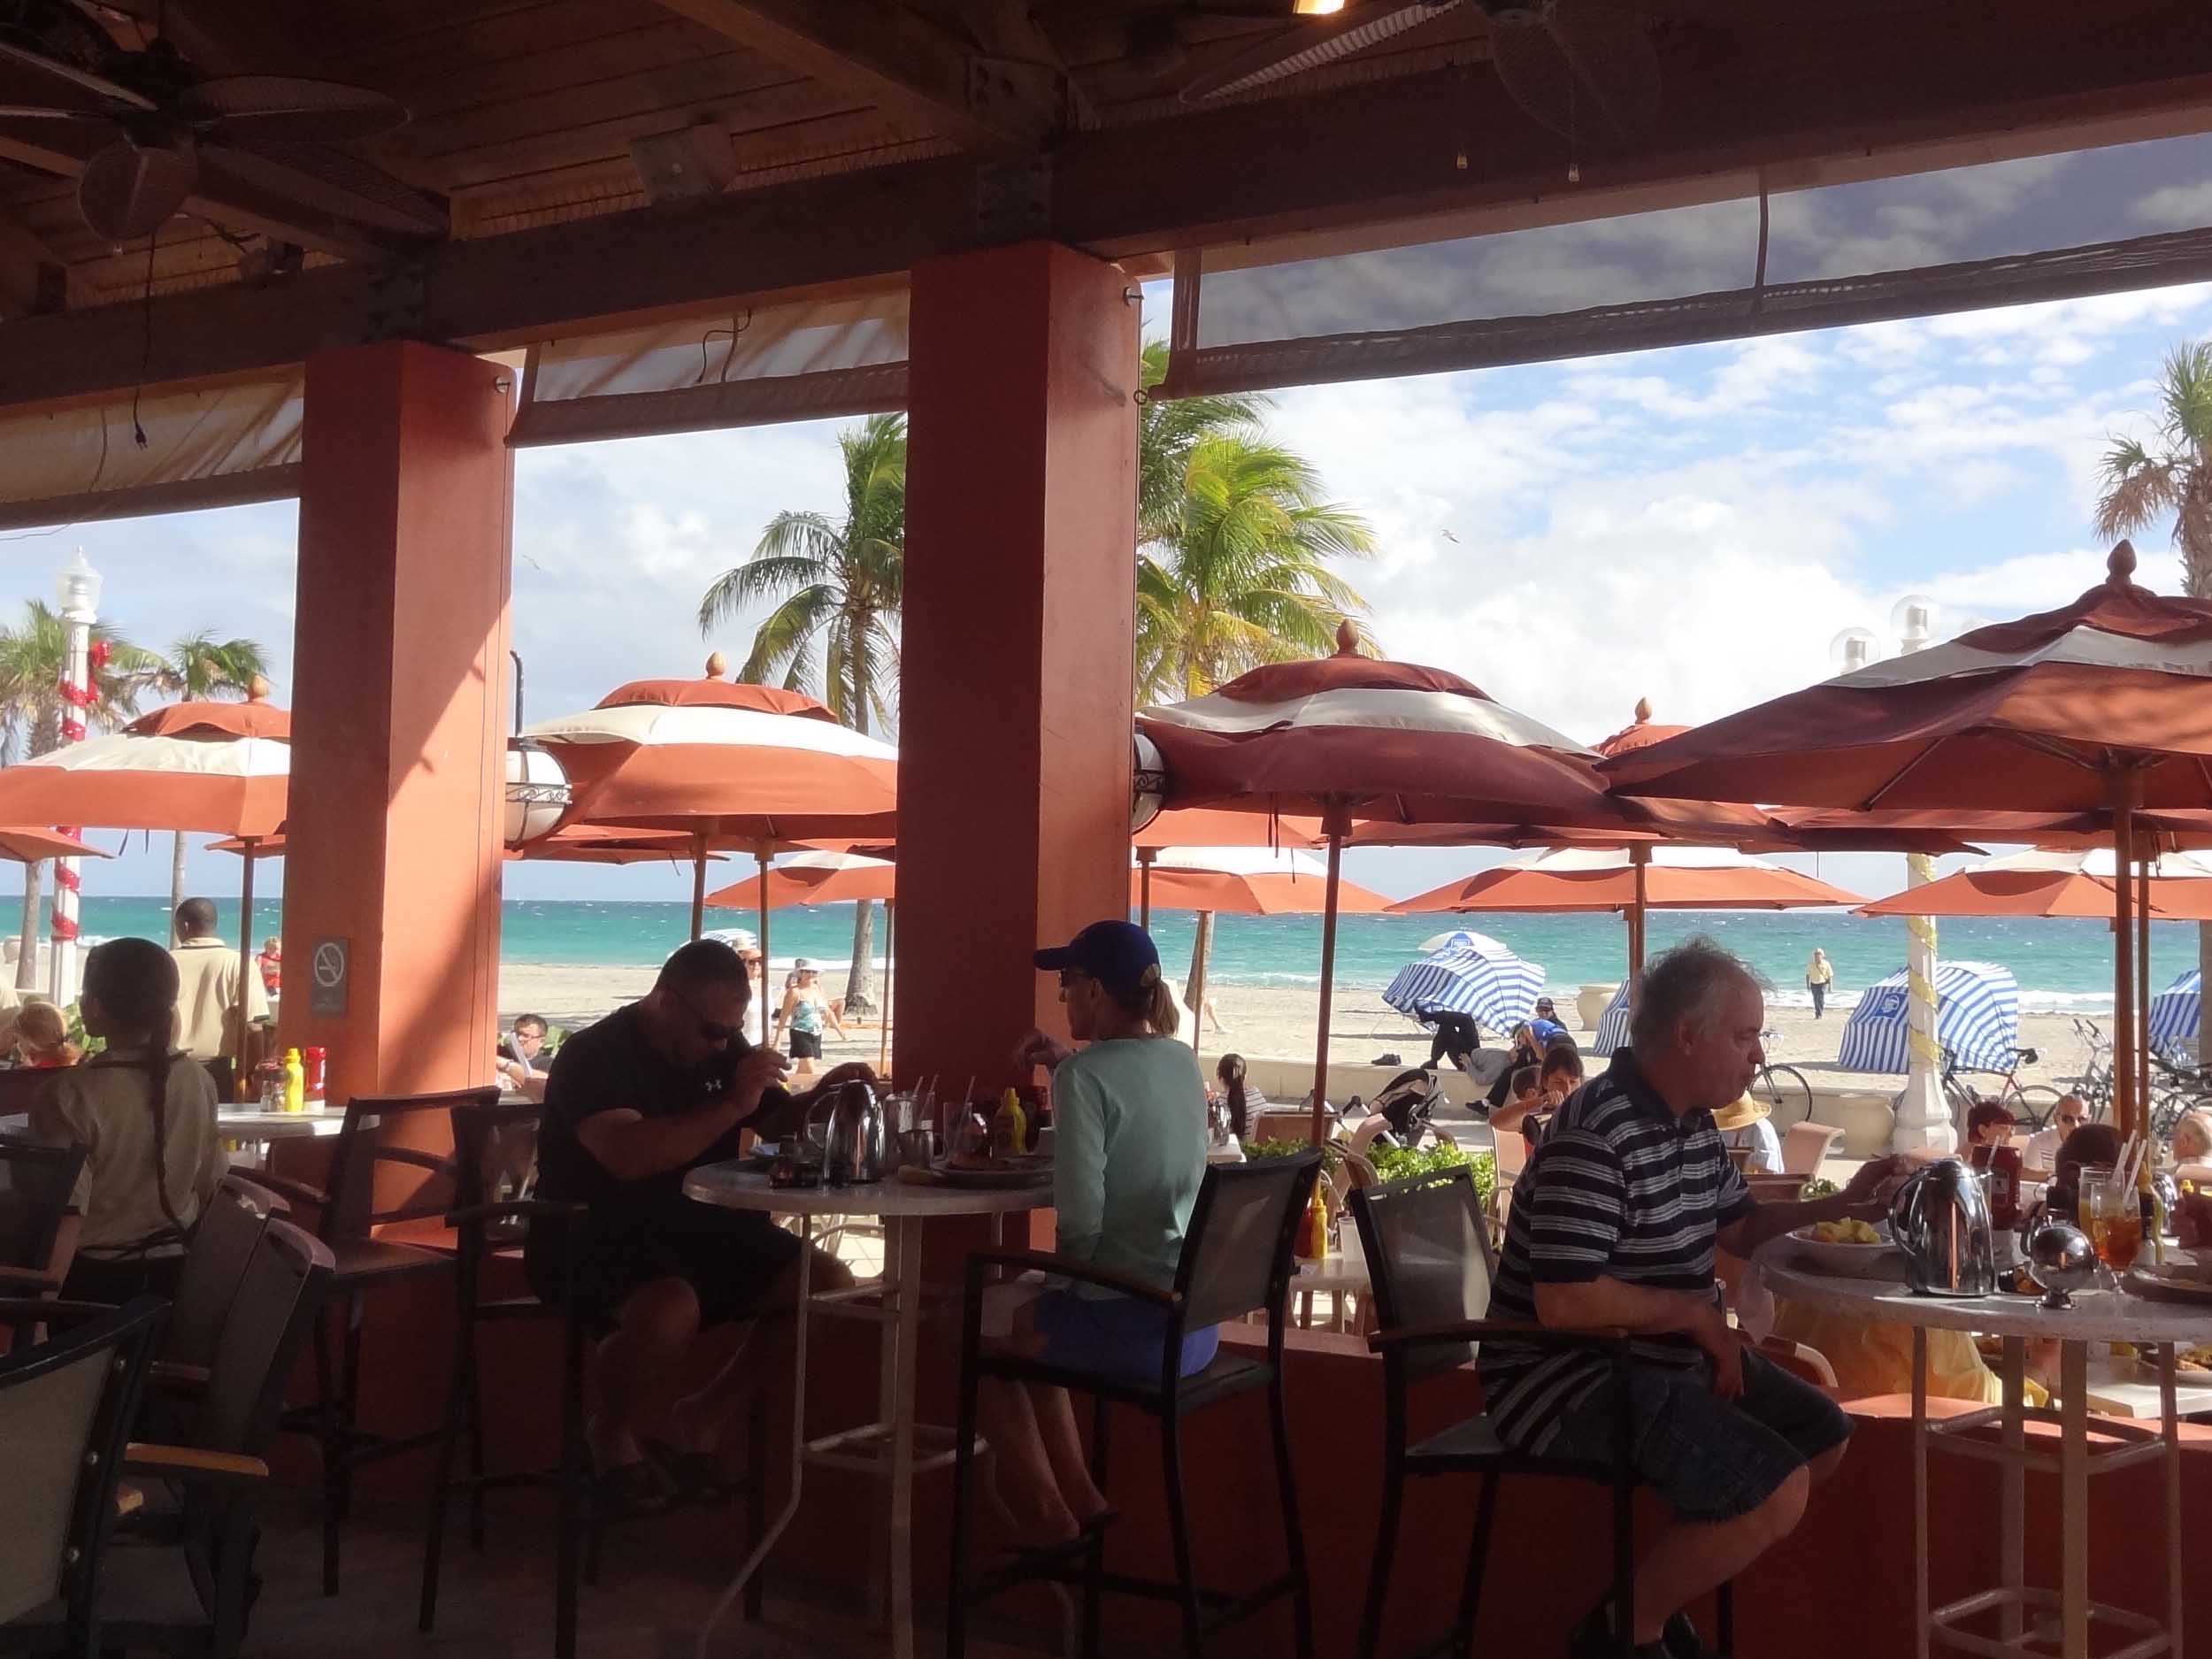 Latitudes Tiki Bar Indoor Dining Area and Beach View